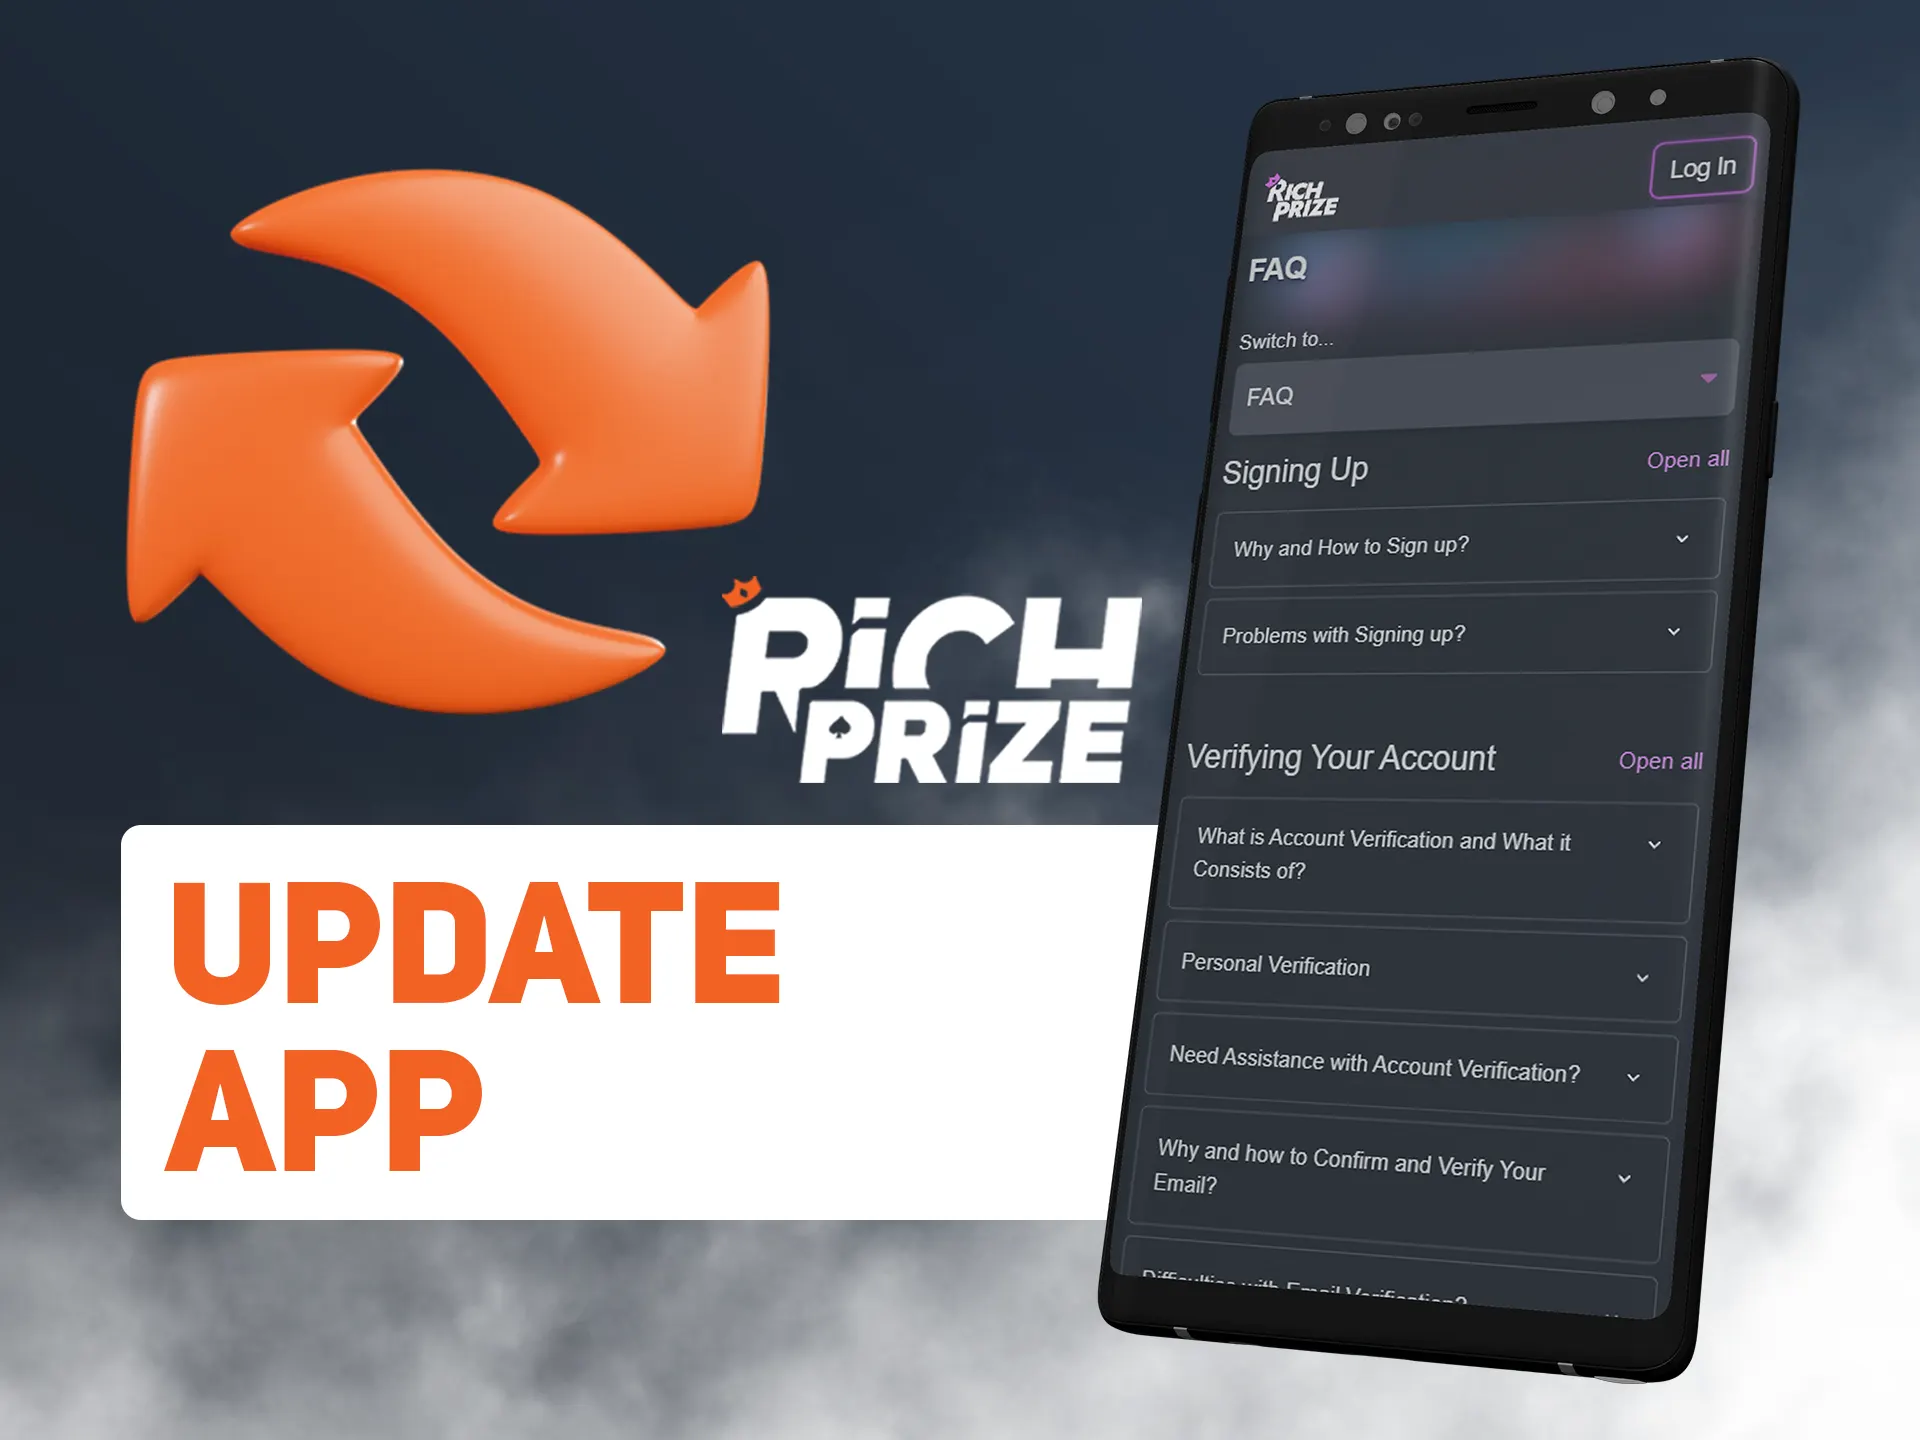 Richprize app updates automatically.